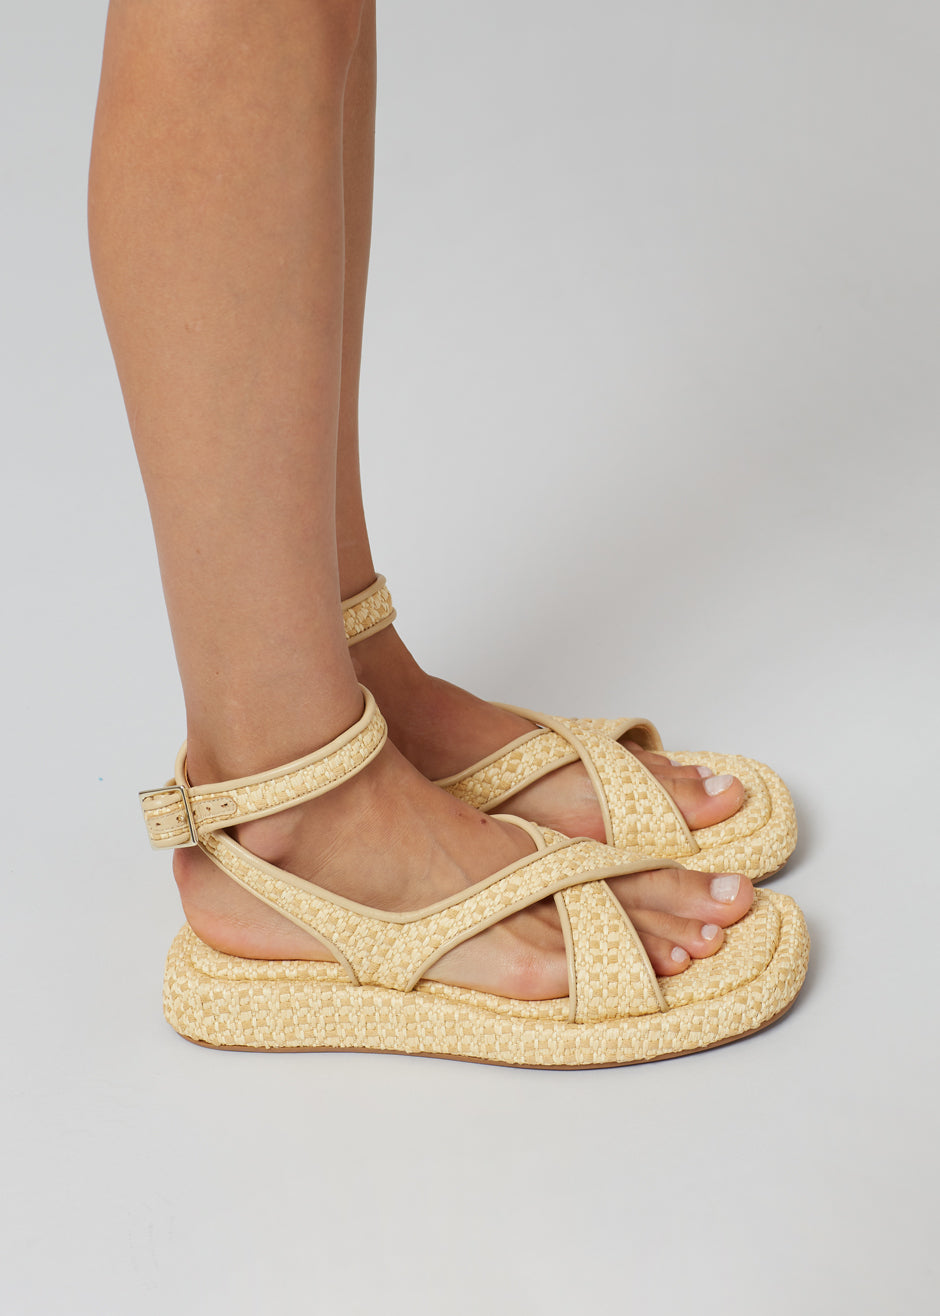 GIA x RHW Rosie Ankle Strap Sandal - Natural Raffia - 6